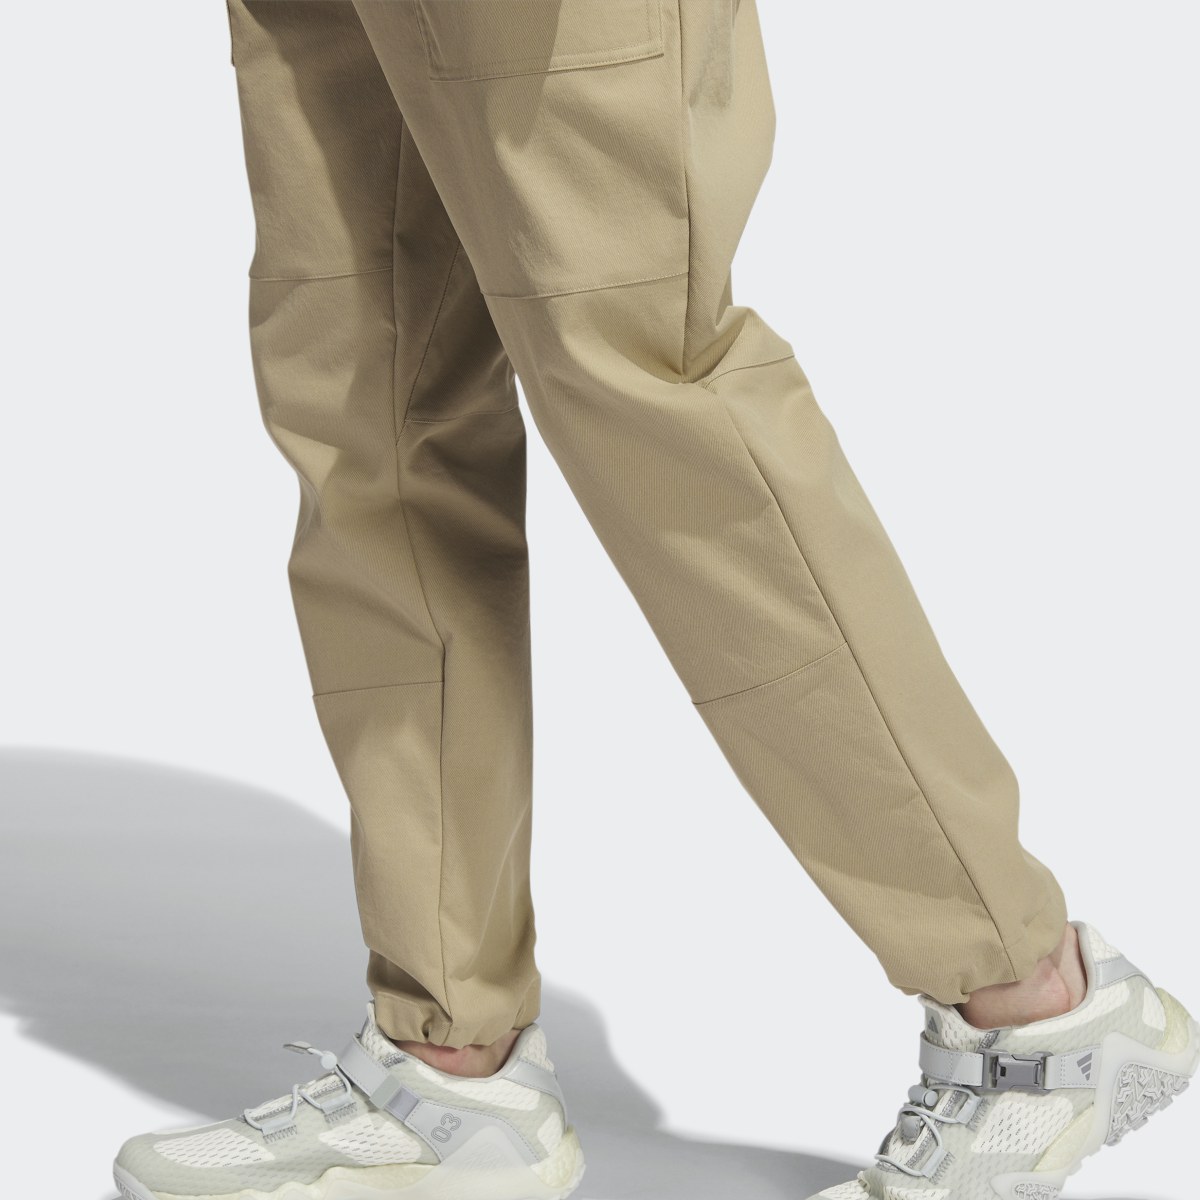 Adidas Adicross Golf Trousers. 7